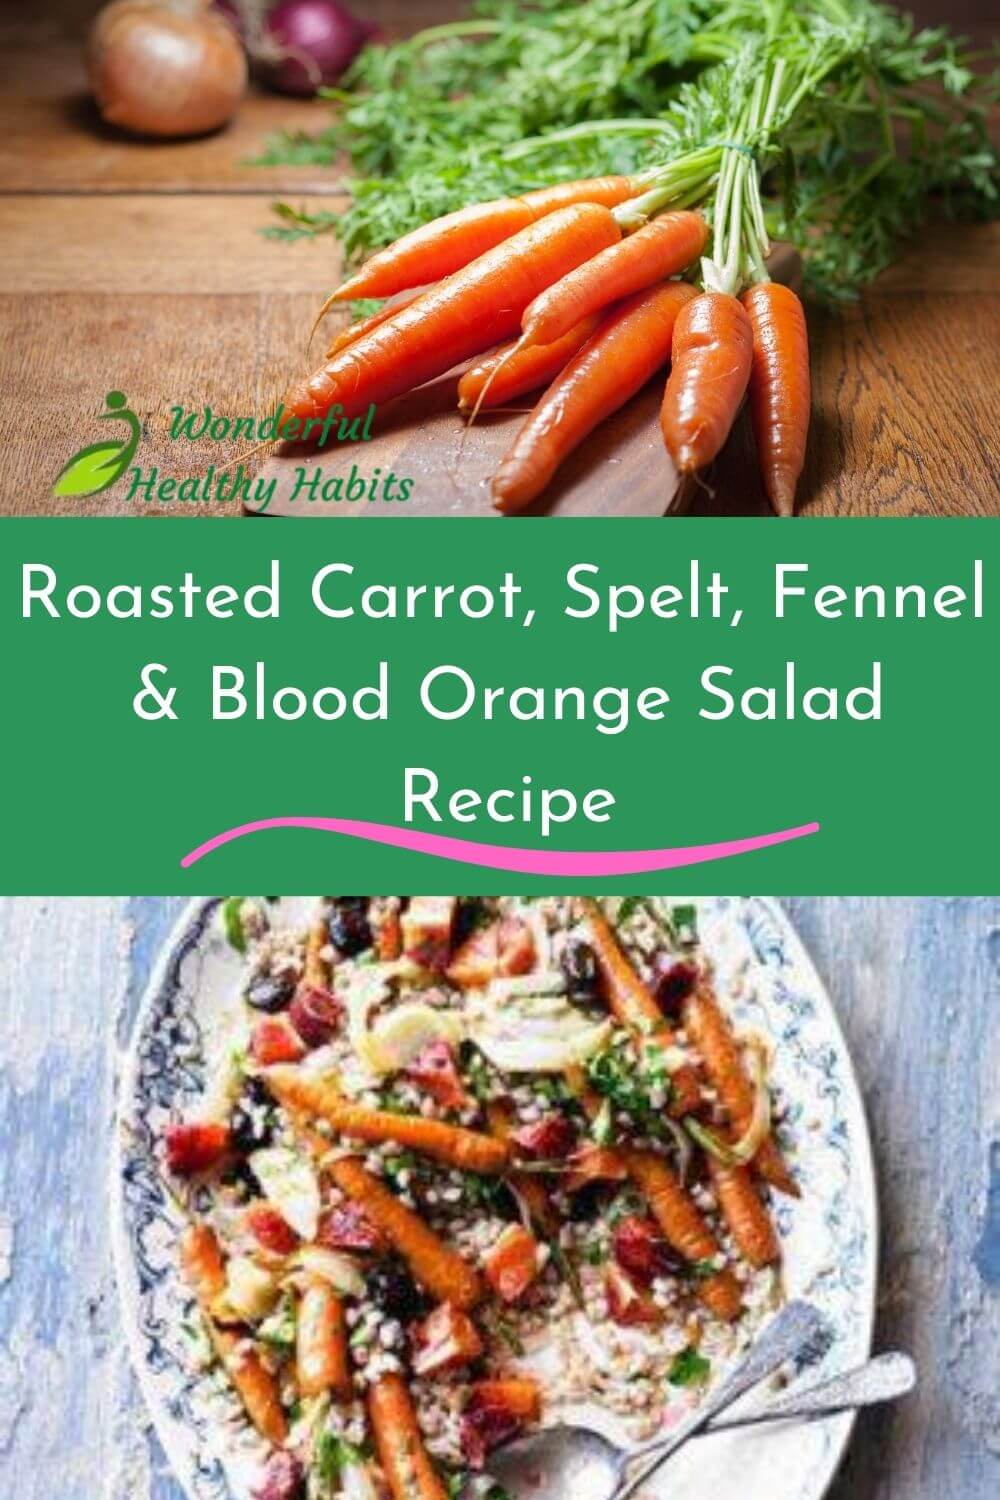 Roasted Carrot, Spelt, Fennel & Blood Orange Salad Recipe